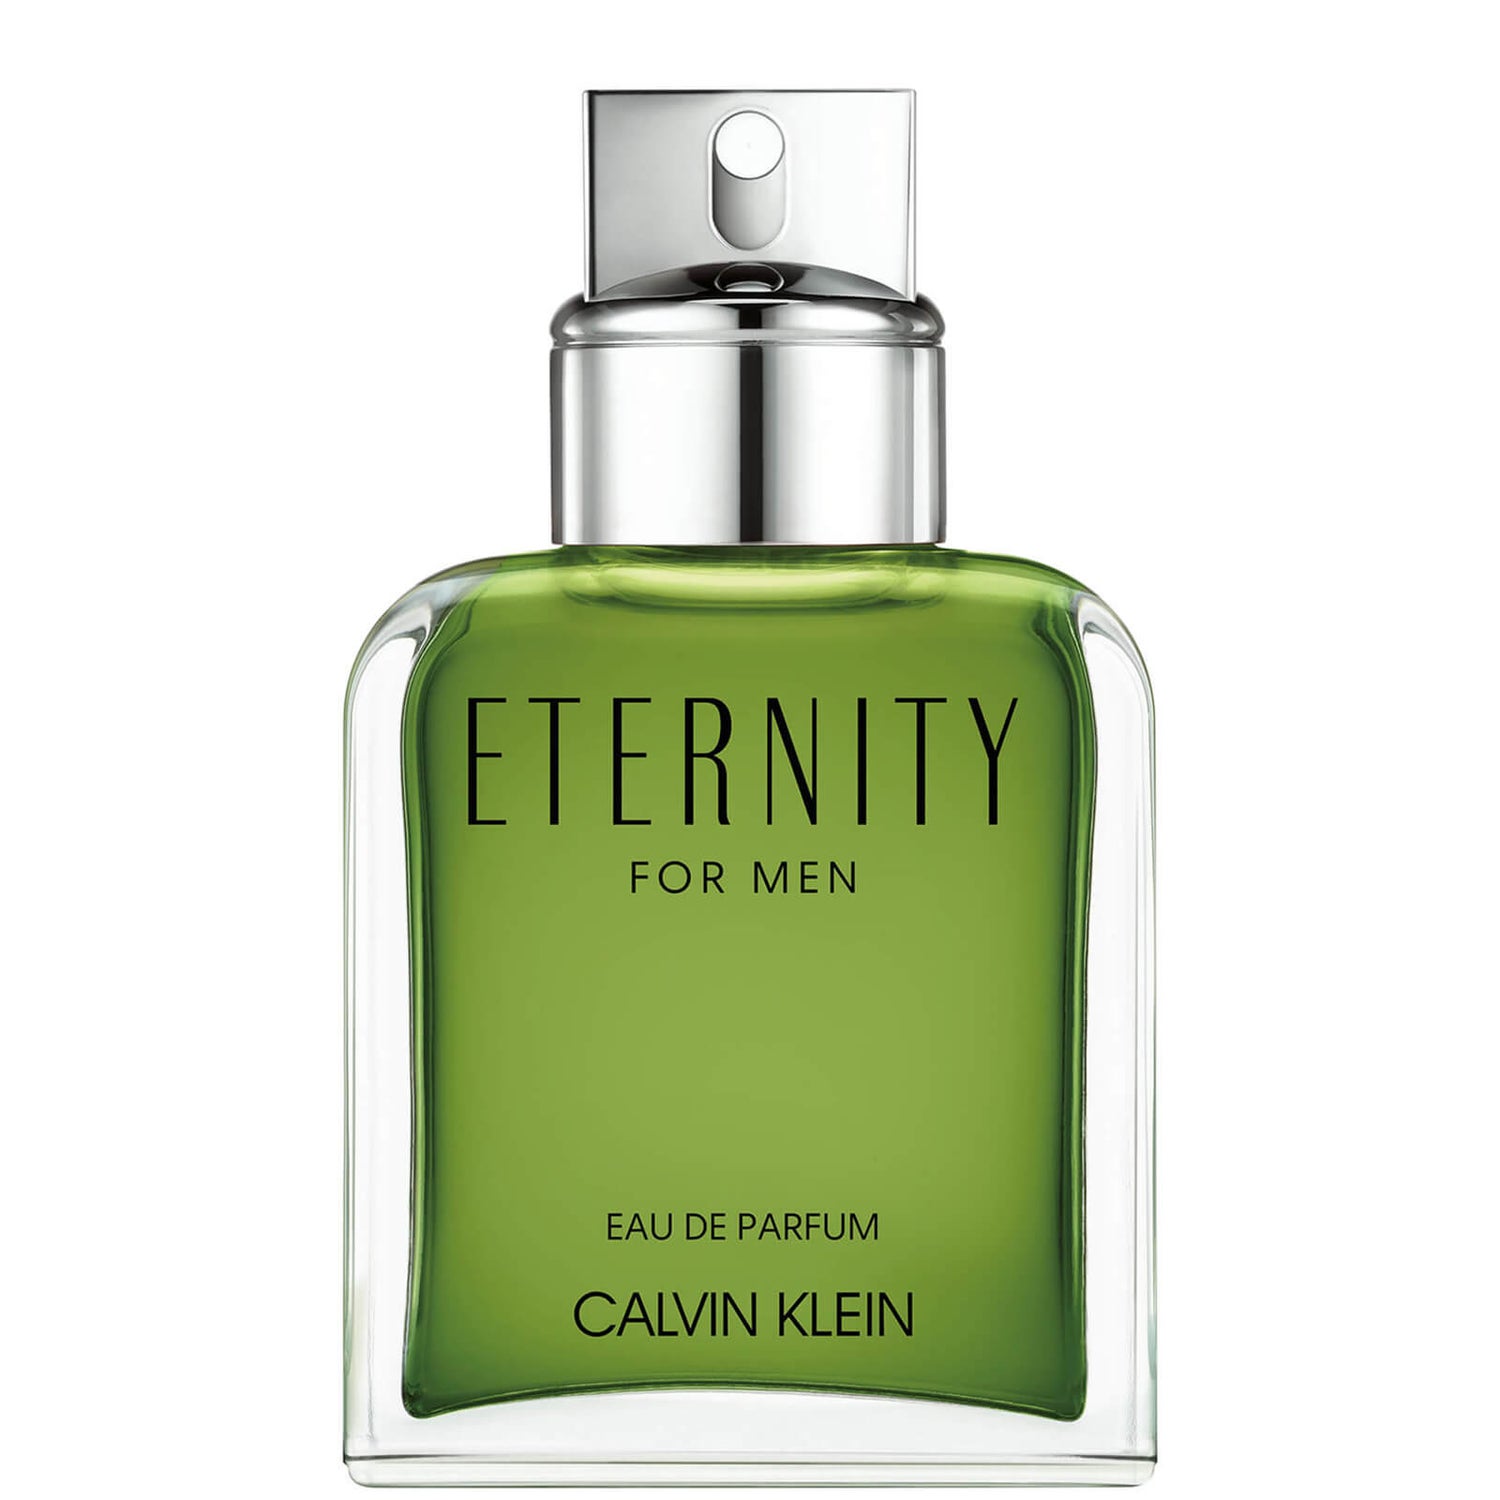 Calvin Klein Eternity for Men Eau de Parfum 100ml | Free US Shipping |  lookfantastic